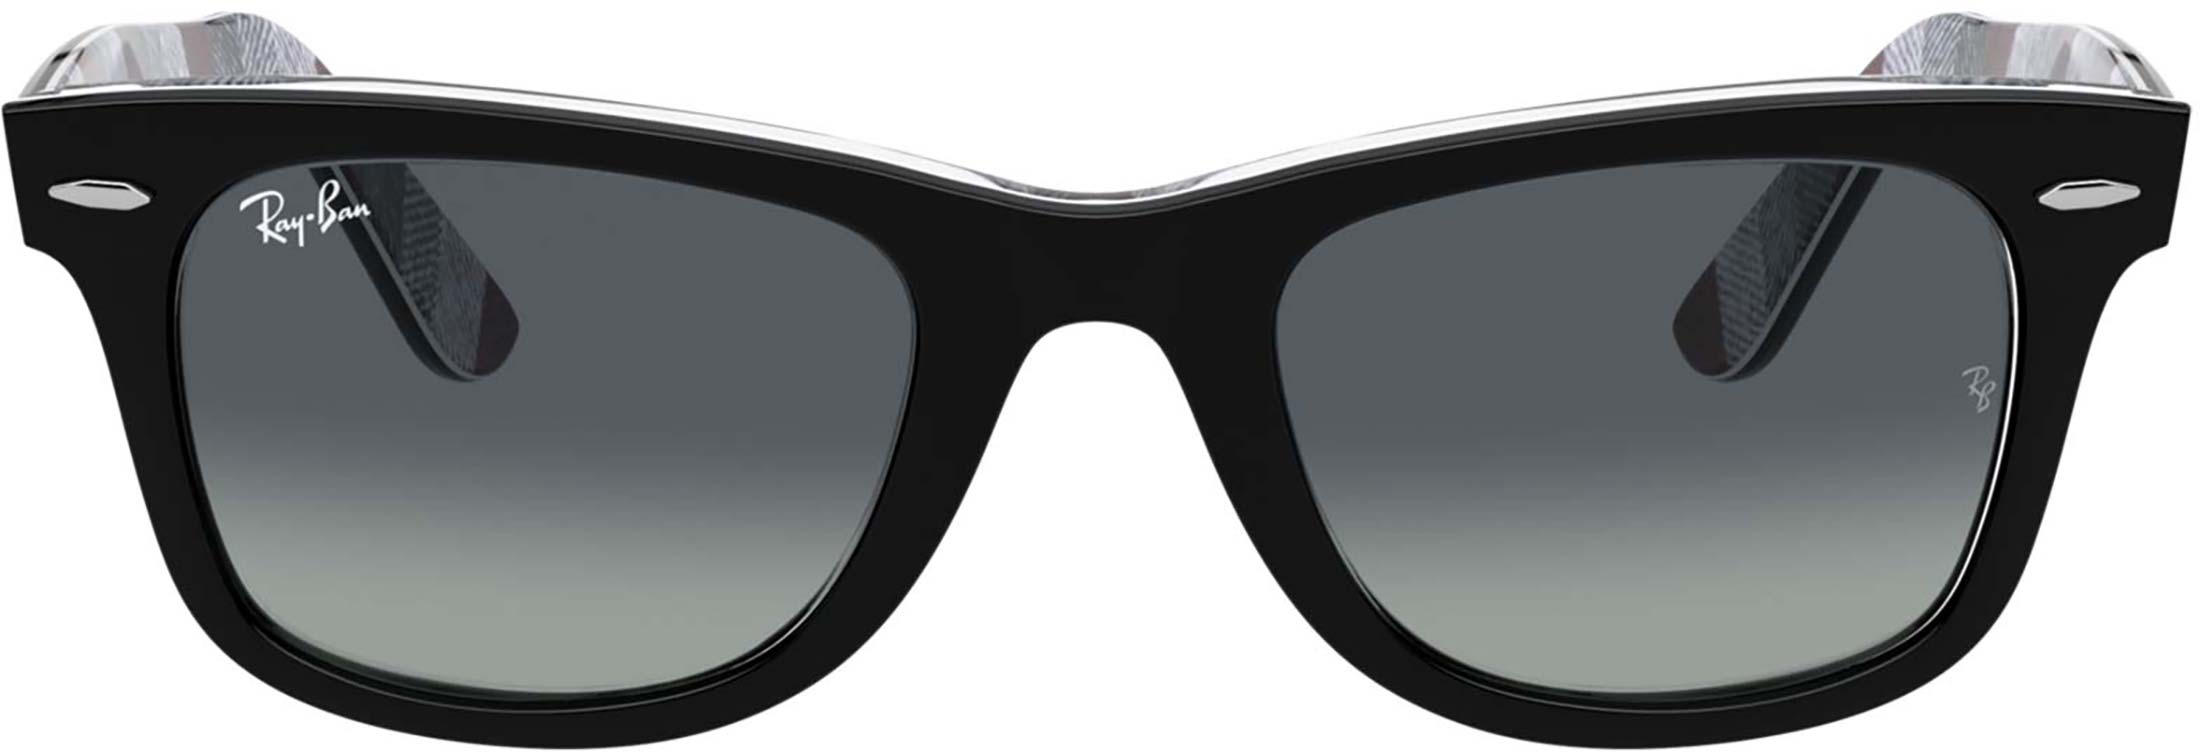 Ray-Ban Wayfarer solbriller Extra Optical